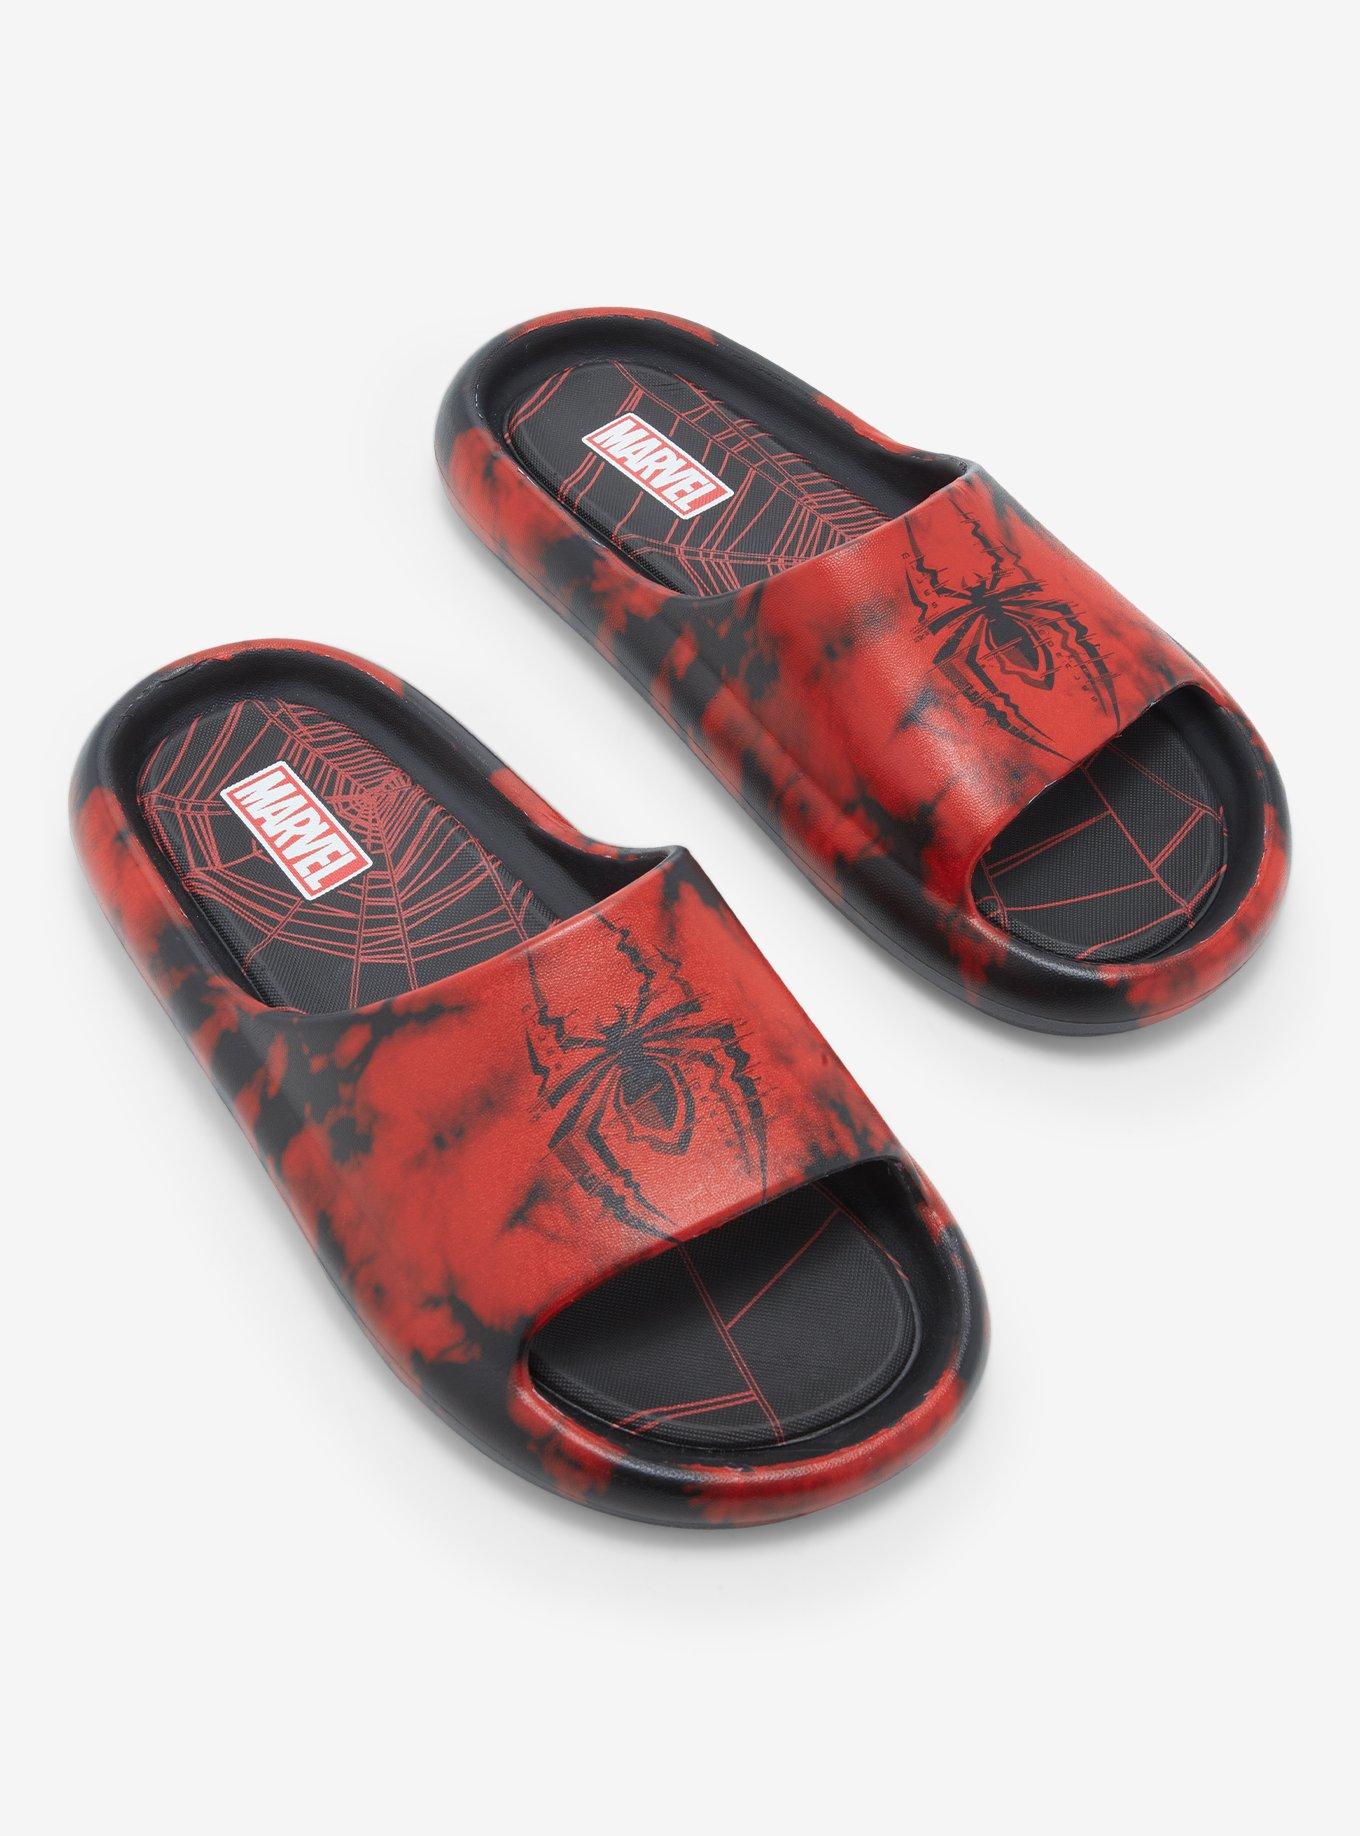 Marvel Spider Man 3-D Marvel print Slide Slipper Shoe Size Mens US 7 EU 39/40